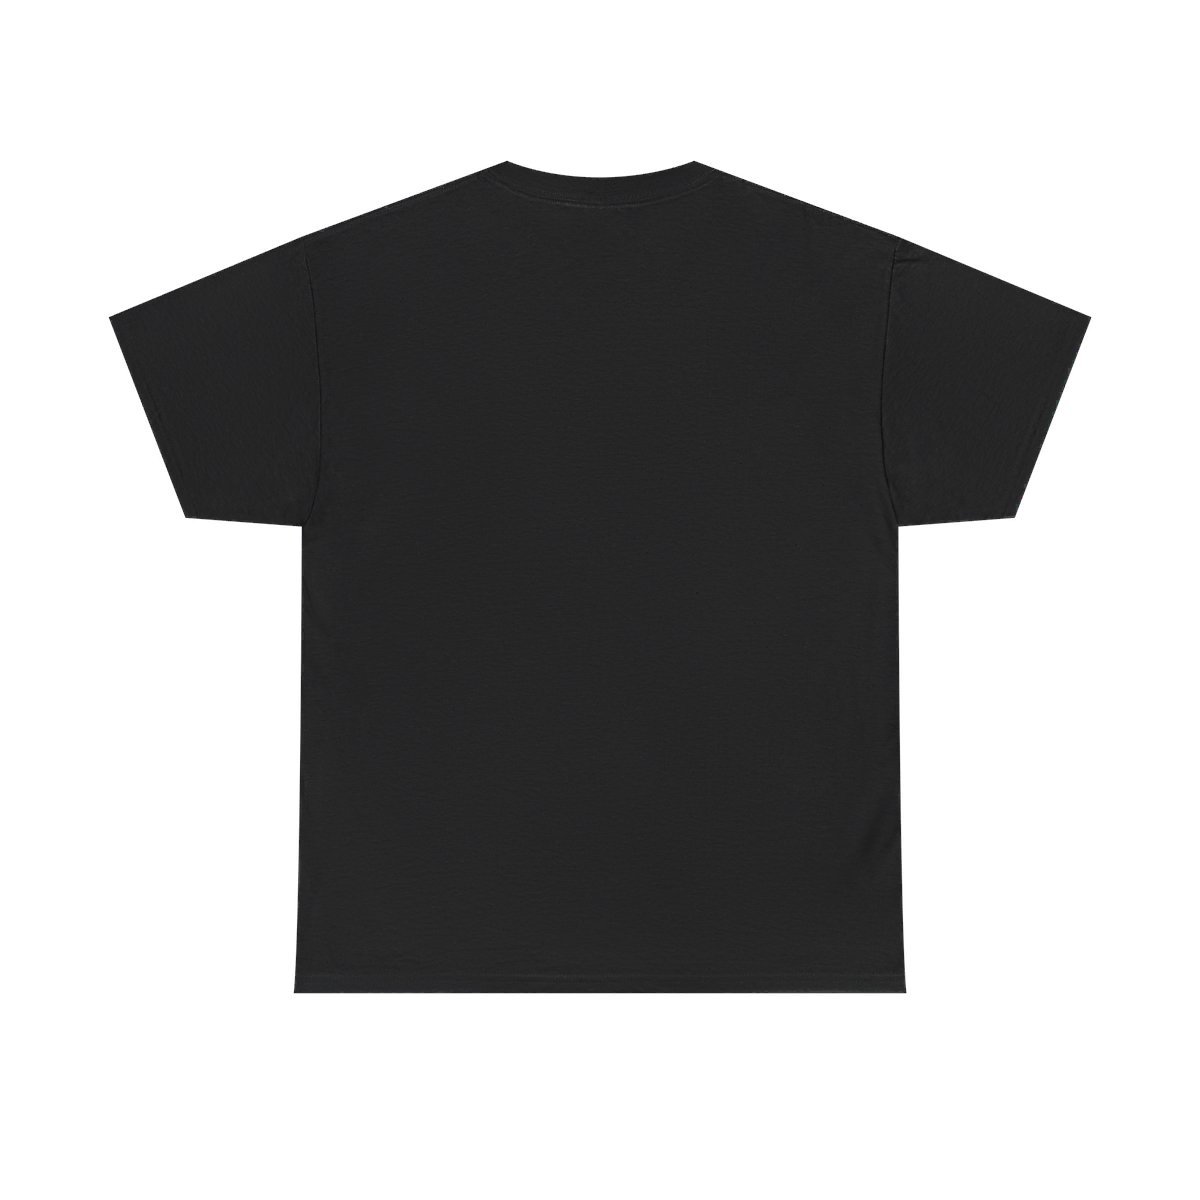 Peter118 – Make It Or Break It Logo Short Sleeve Tshirt